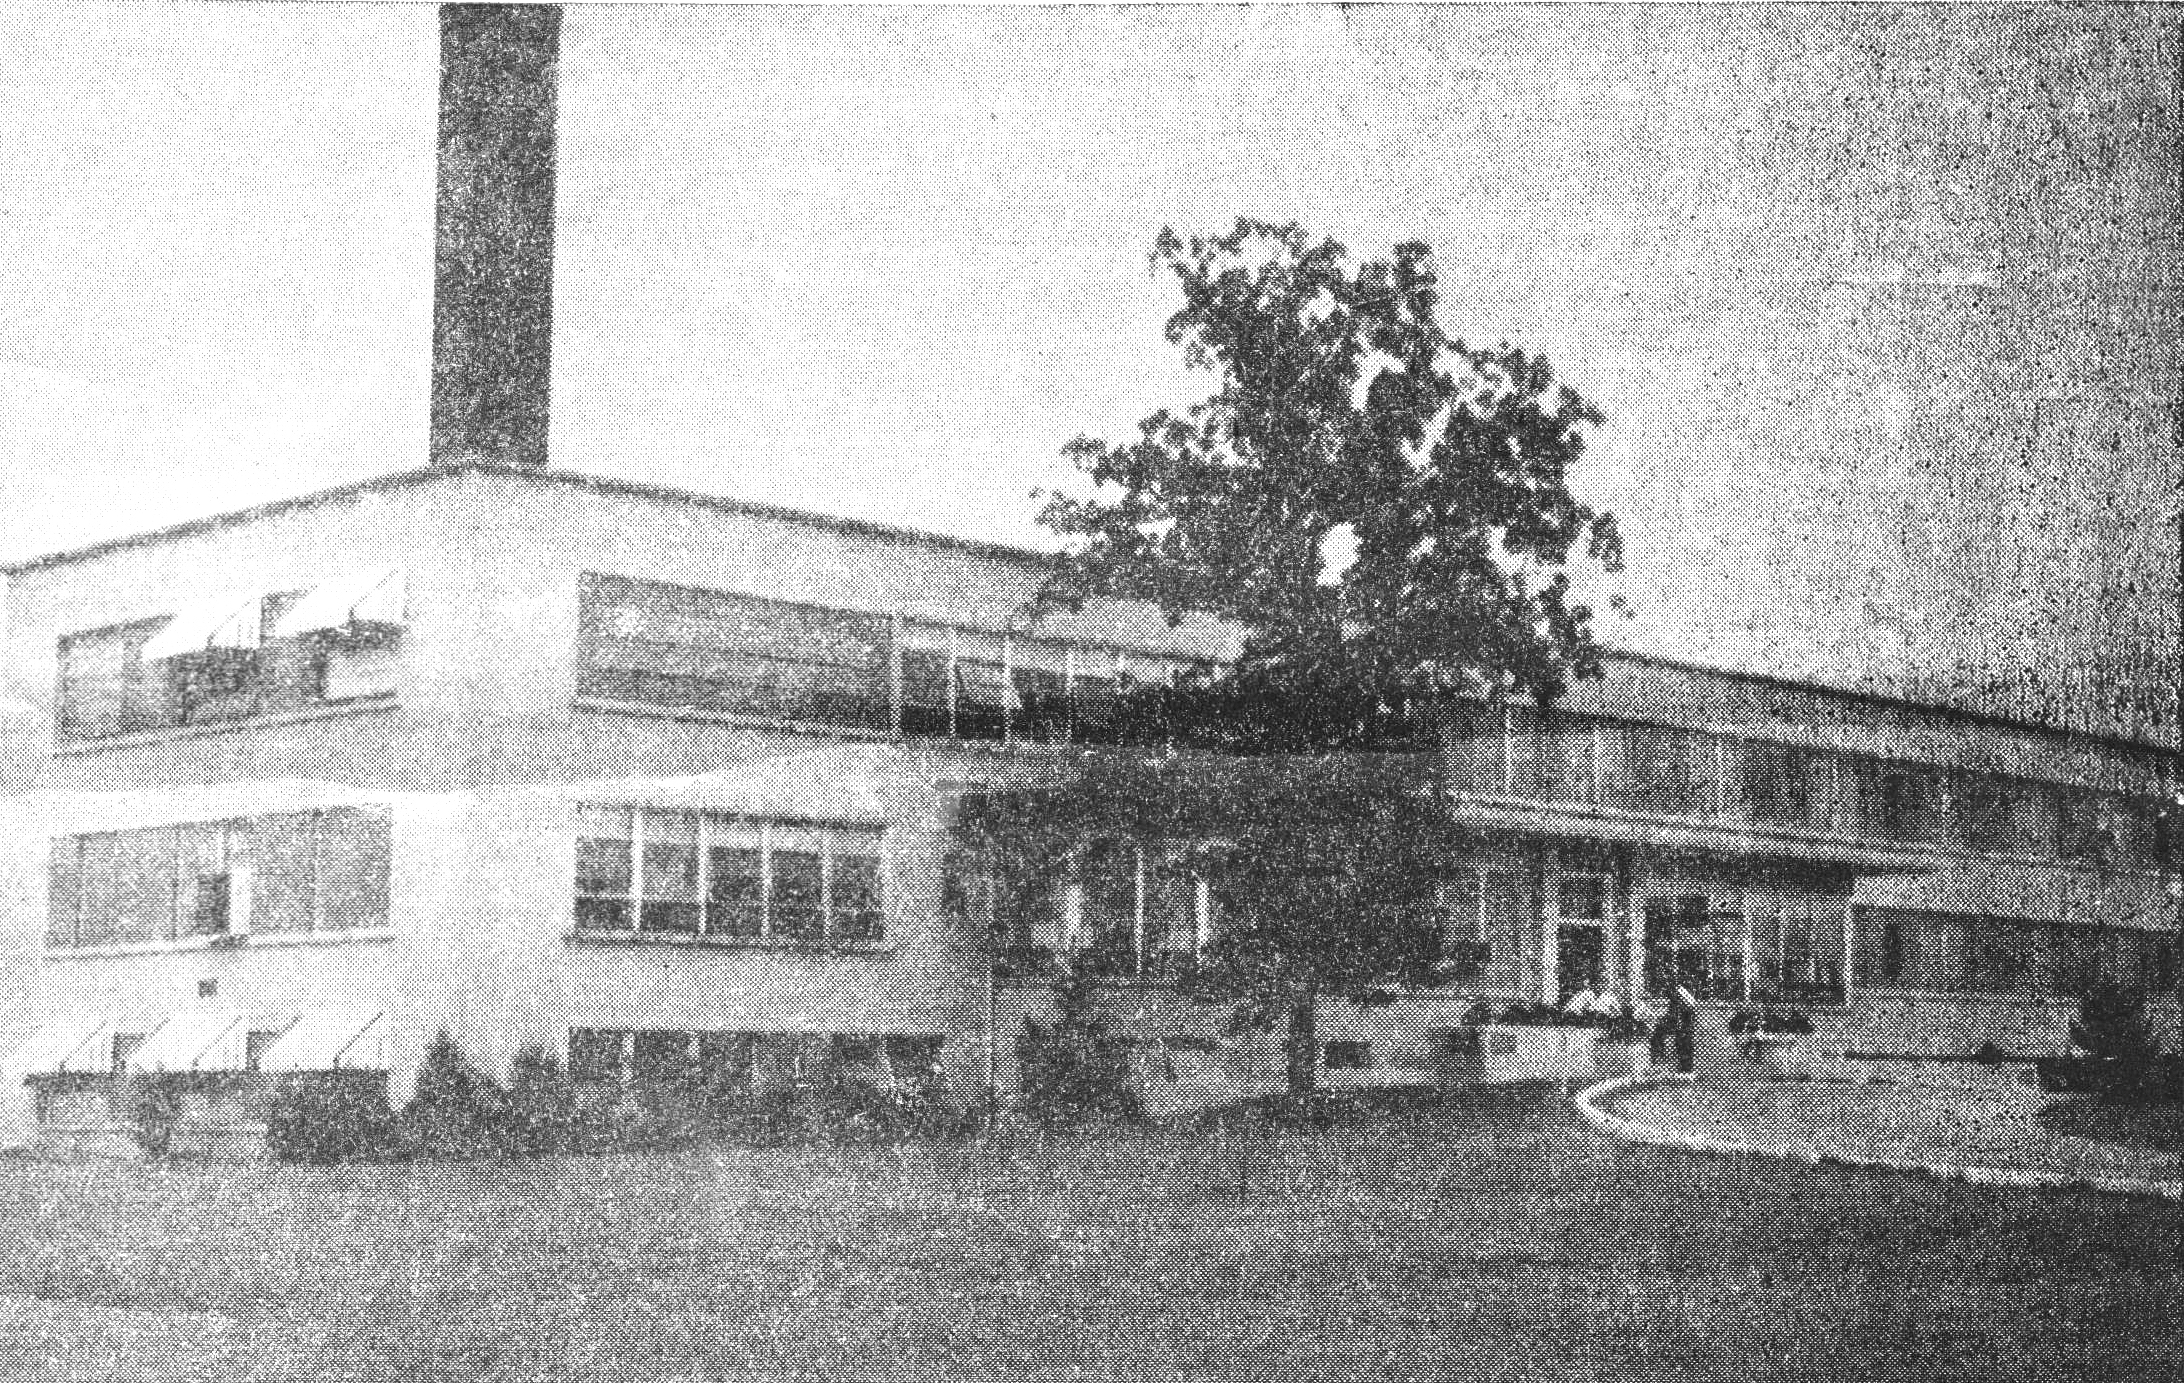 Phelps Memorial Hospital 1951